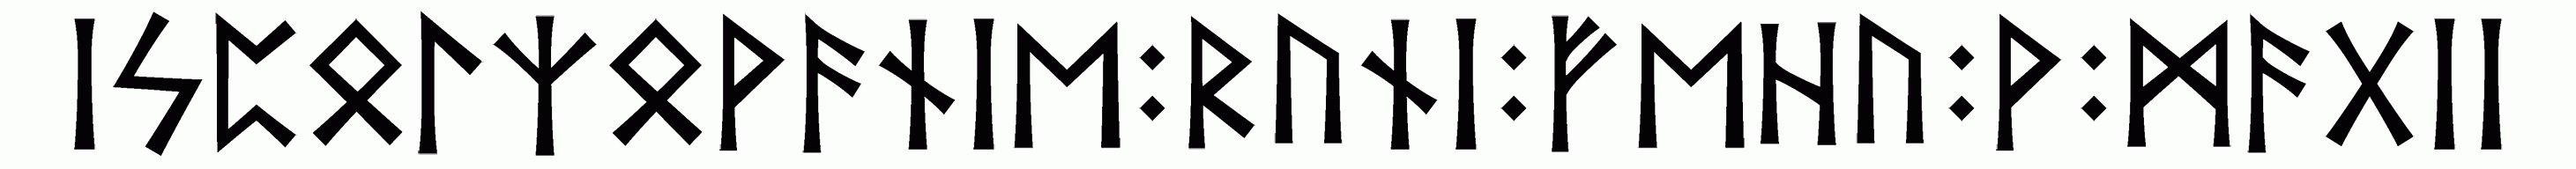 ispolzovanie+runi+fehu+v+magii - Напиши имя  ИСПОЛЬЗОВАНИЕ+РУНЫ+ФЕХУ+В+МАГИИ рунами  - ᛁᛋᛈᛟᛚᛉᛟᚹᚨᚾᛁᛖ:ᚱᚢᚾᛁ:ᚠᛖᚺᚢ:ᚹ:ᛗᚨᚷᛁᛁ - Значение и характер имени  ИСПОЛЬЗОВАНИЕ+РУНЫ+ФЕХУ+В+МАГИИ - 